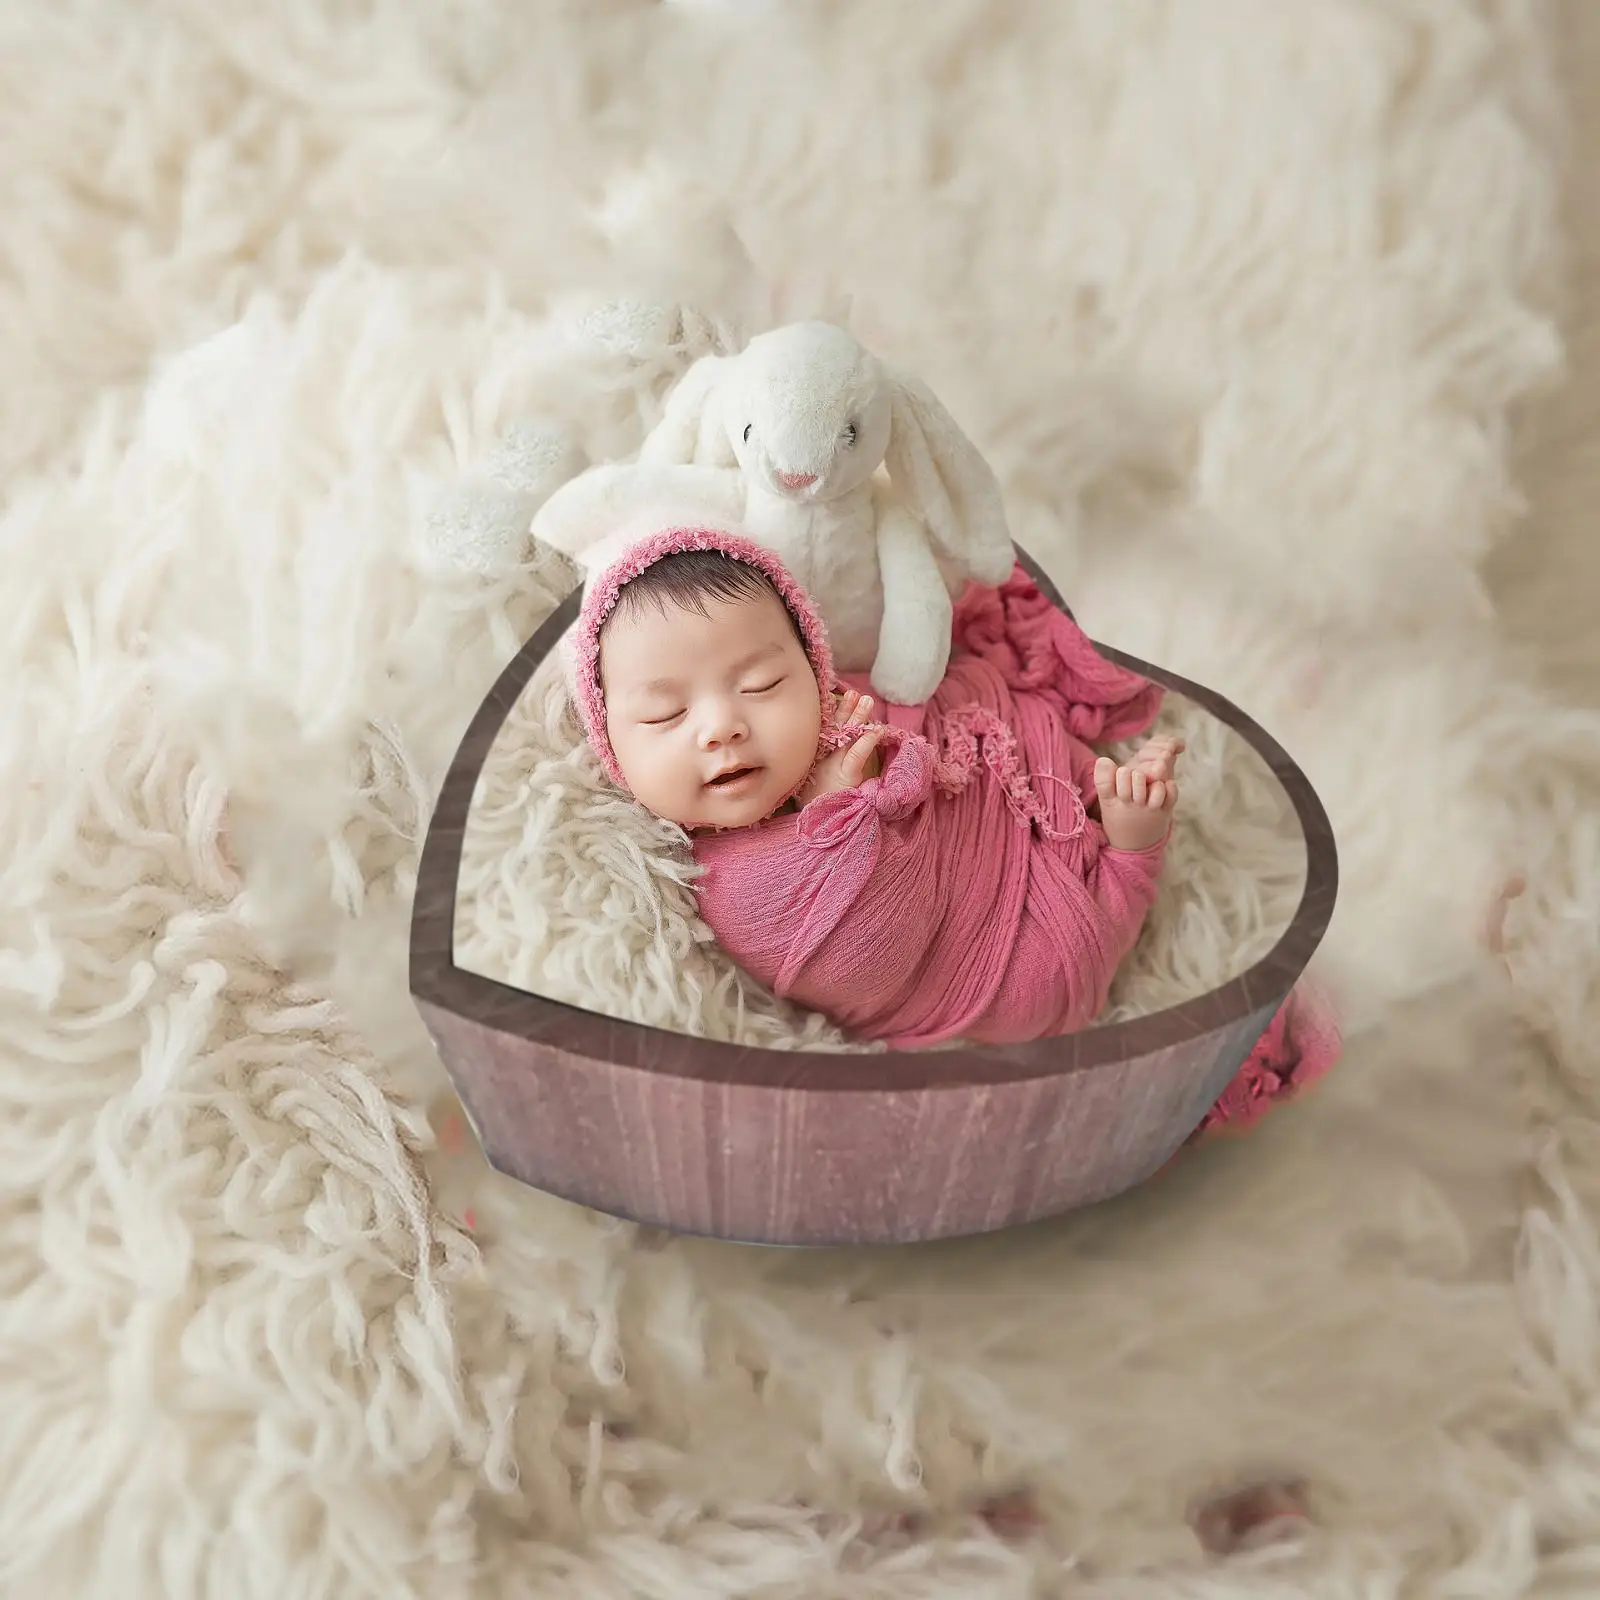 Newborn Infants Photography Props Wood Basin Heart Shaped Multi Purpose Cute